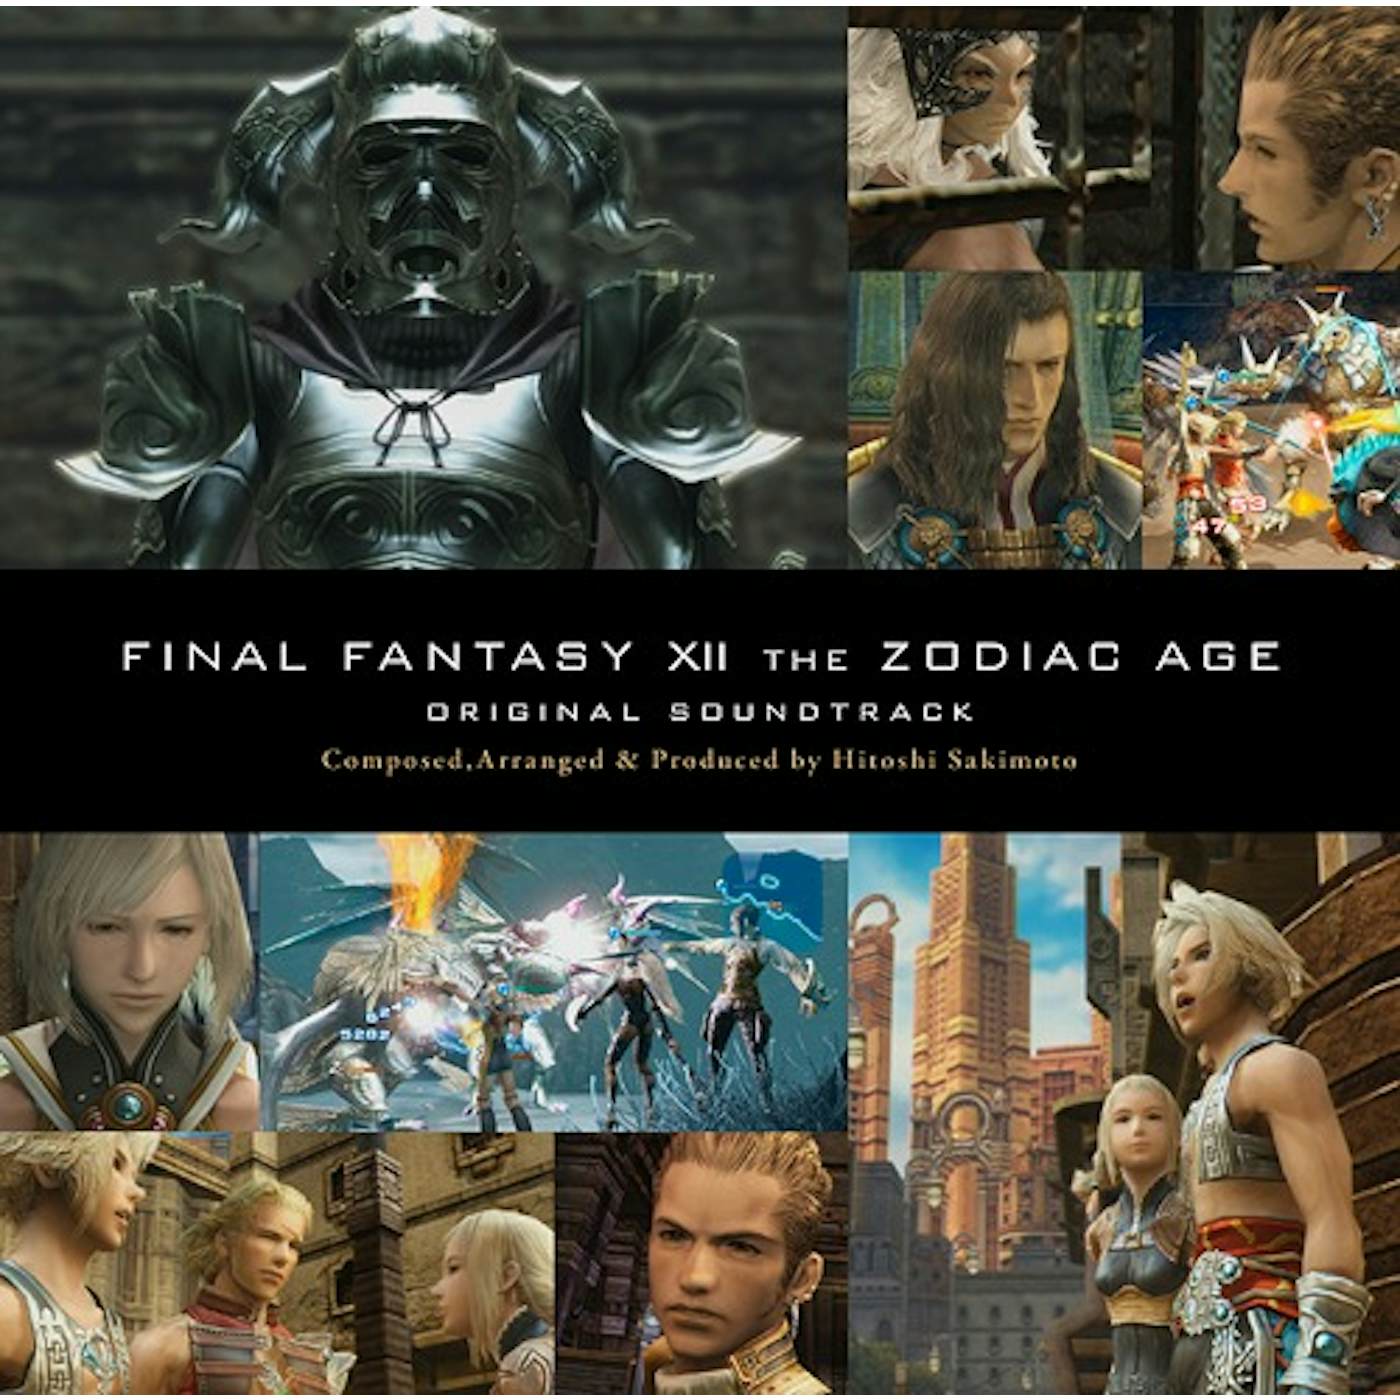 Final Fantasy ZODIAC AGE: FANTASY XII / Original Soundtrack CD